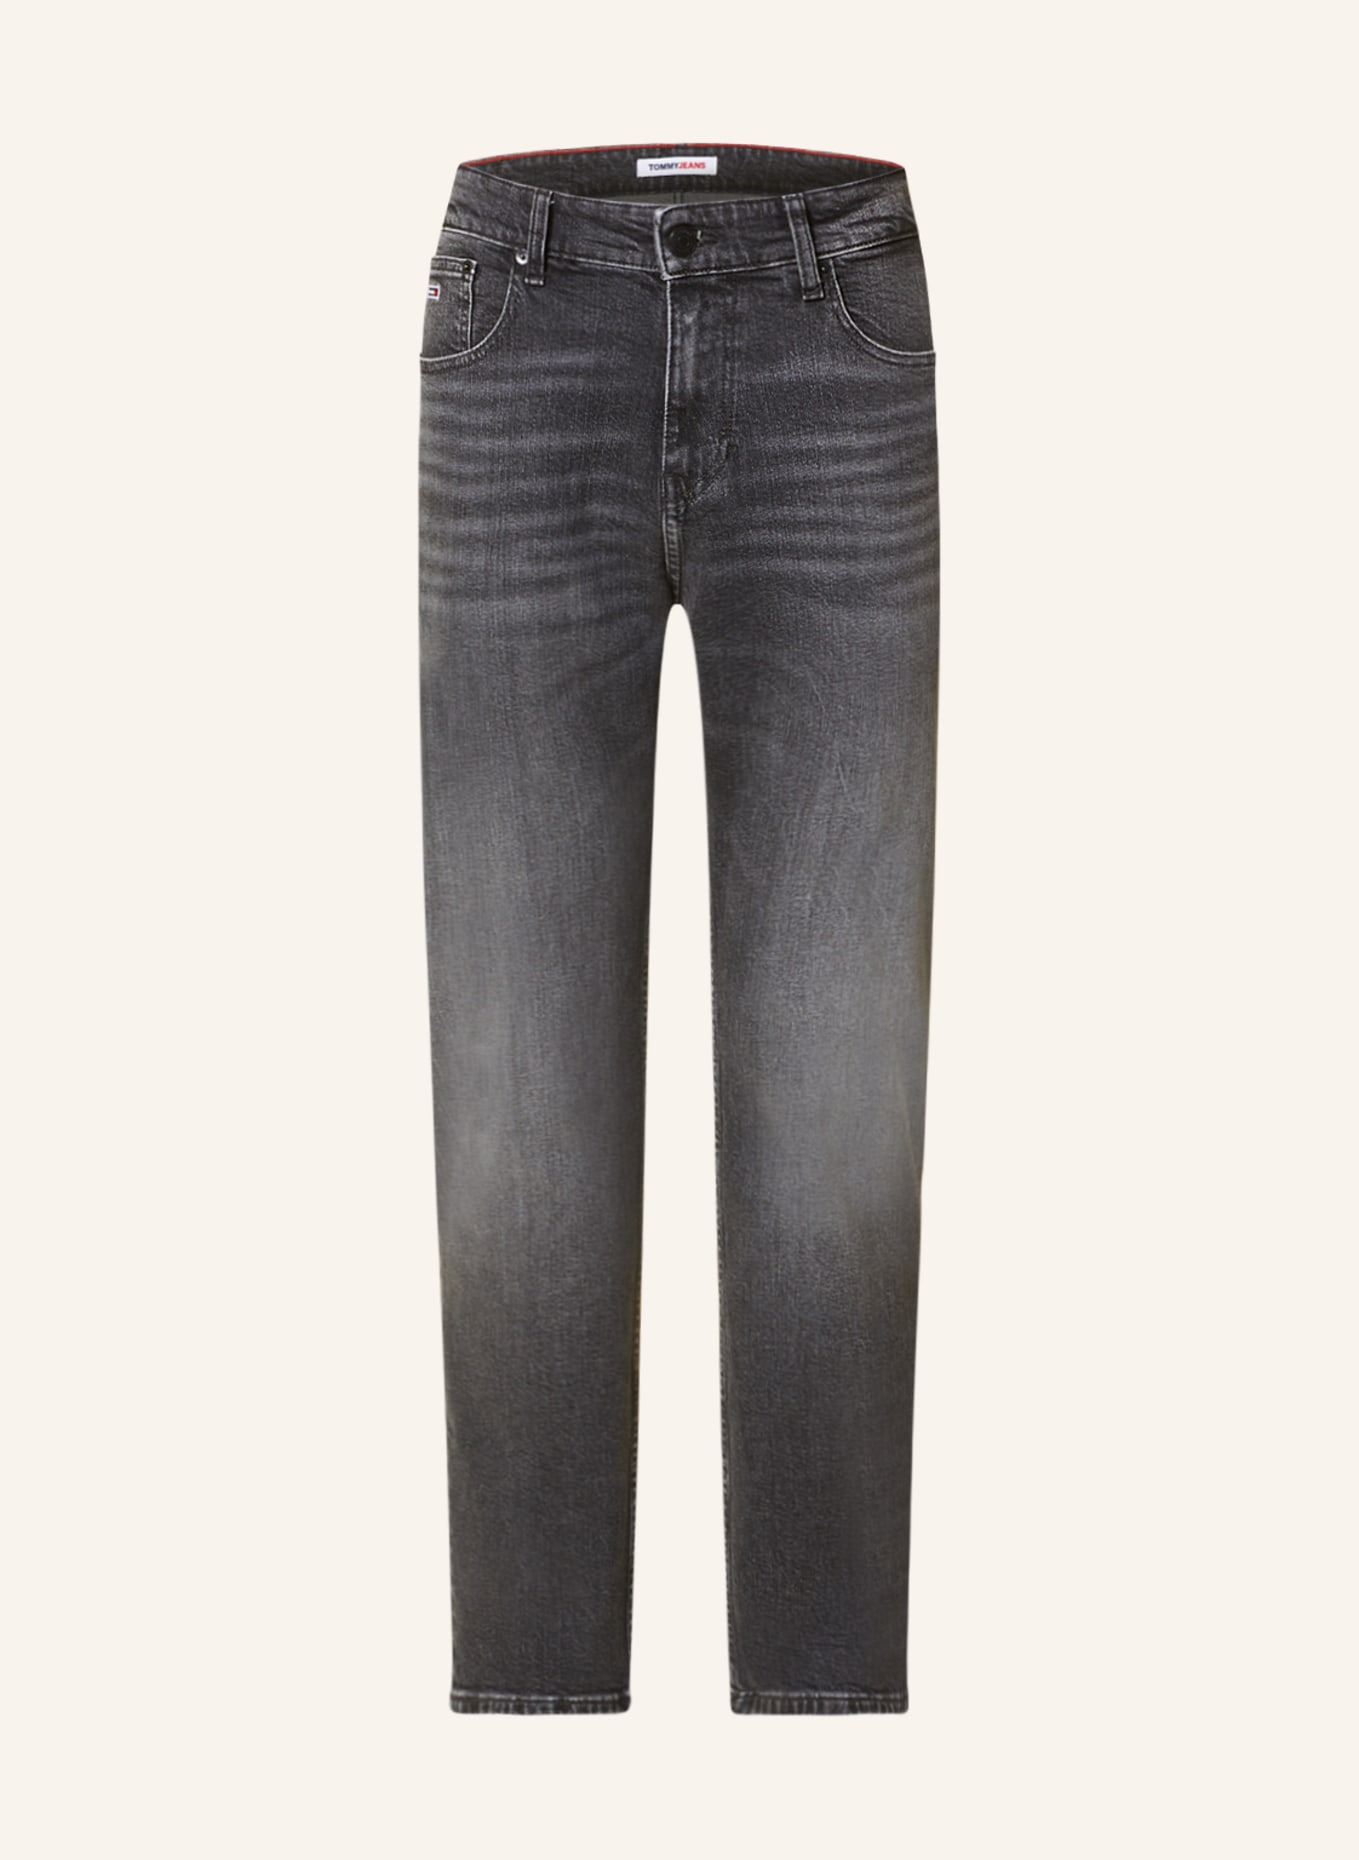 TOMMY JEANS Jeans RYAN Straight Fit, Farbe: 1BZ Denim Black (Bild 1)